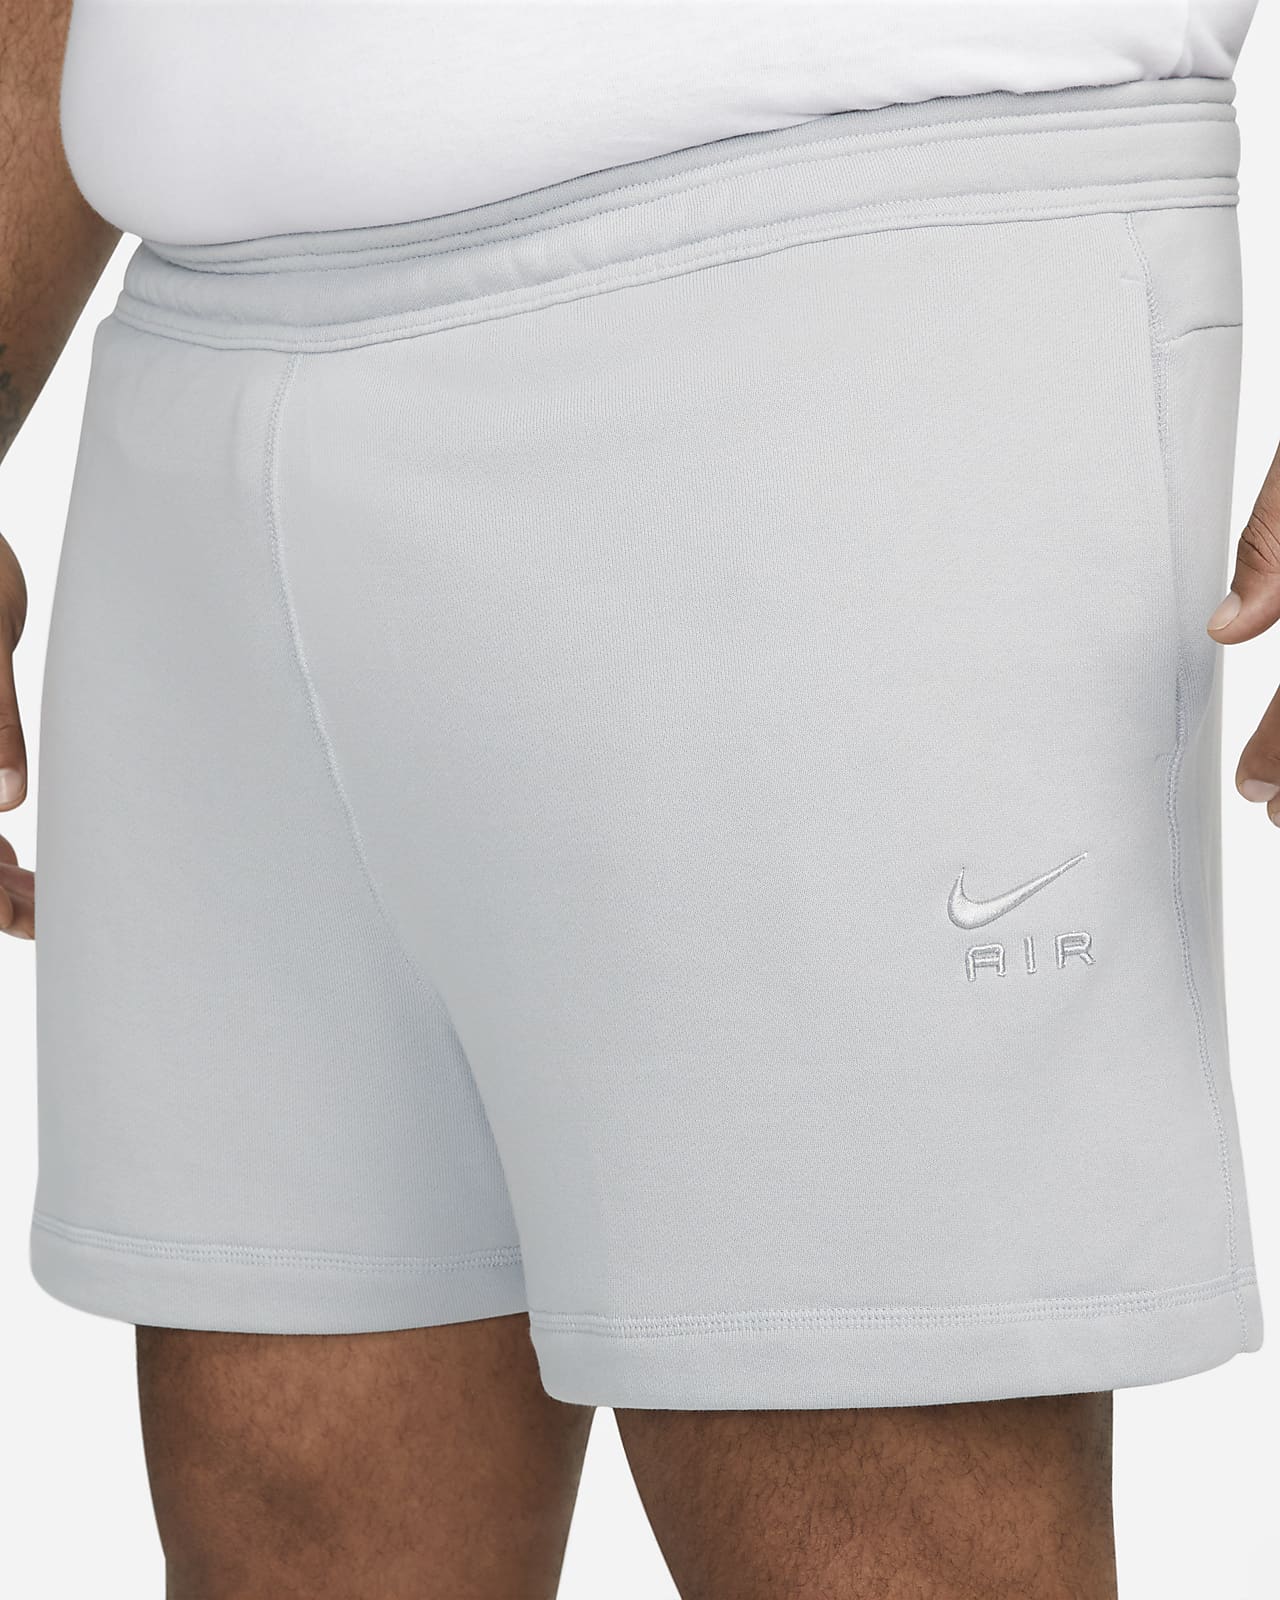 French Terry Air Sportswear Nike Men\'s Shorts.